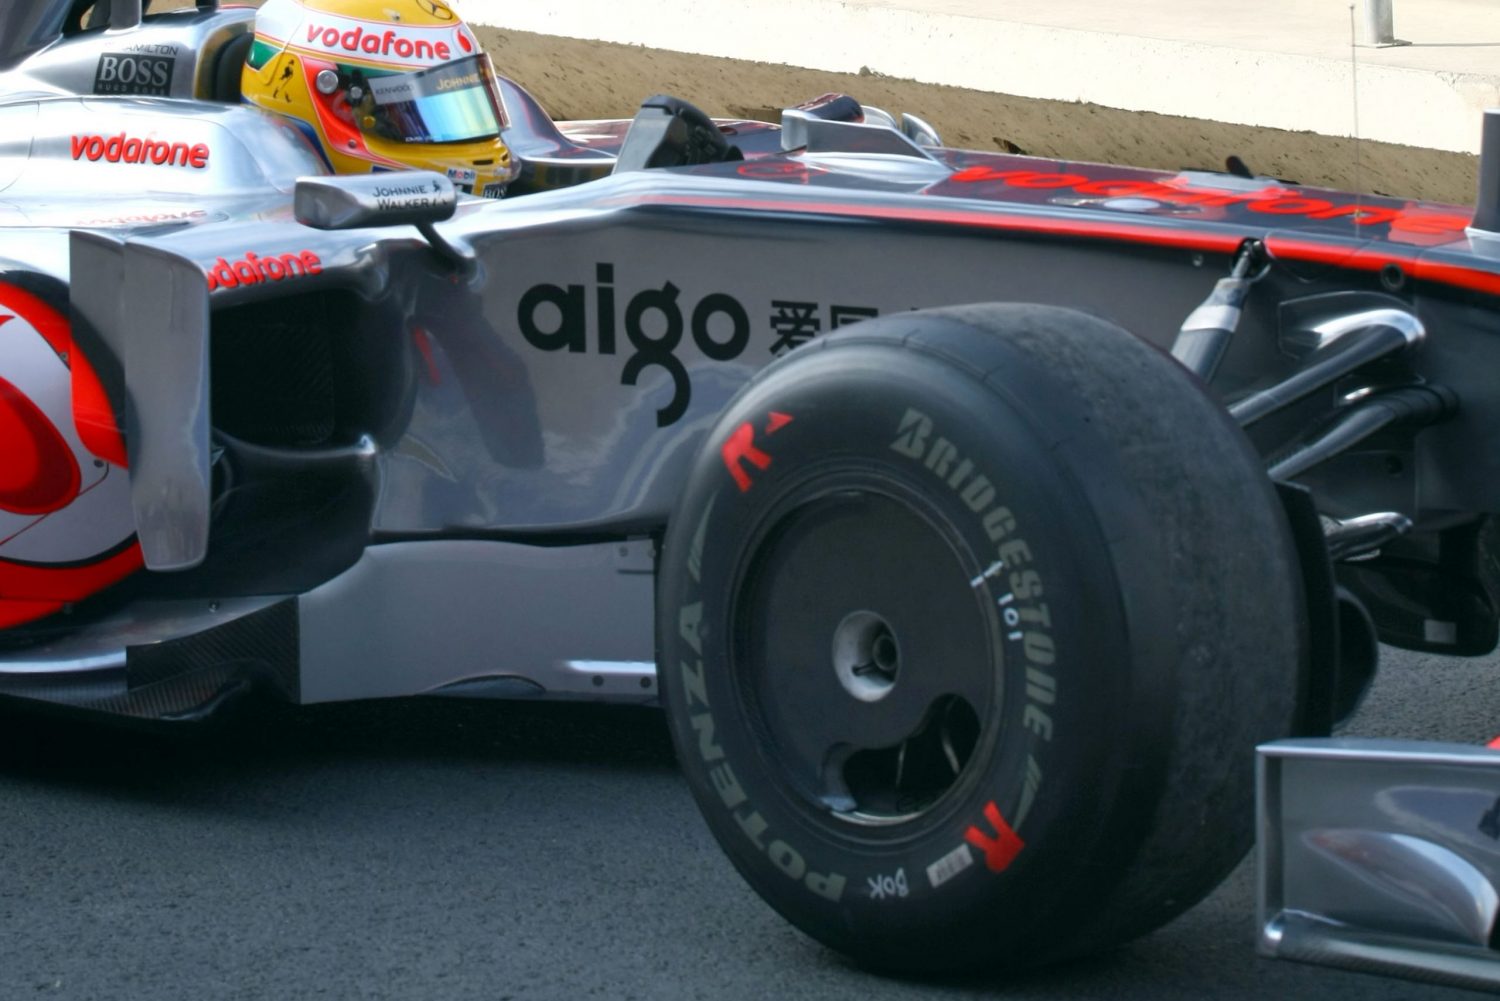 Bridgestone reportedly bids for Formula 1 tyre contract